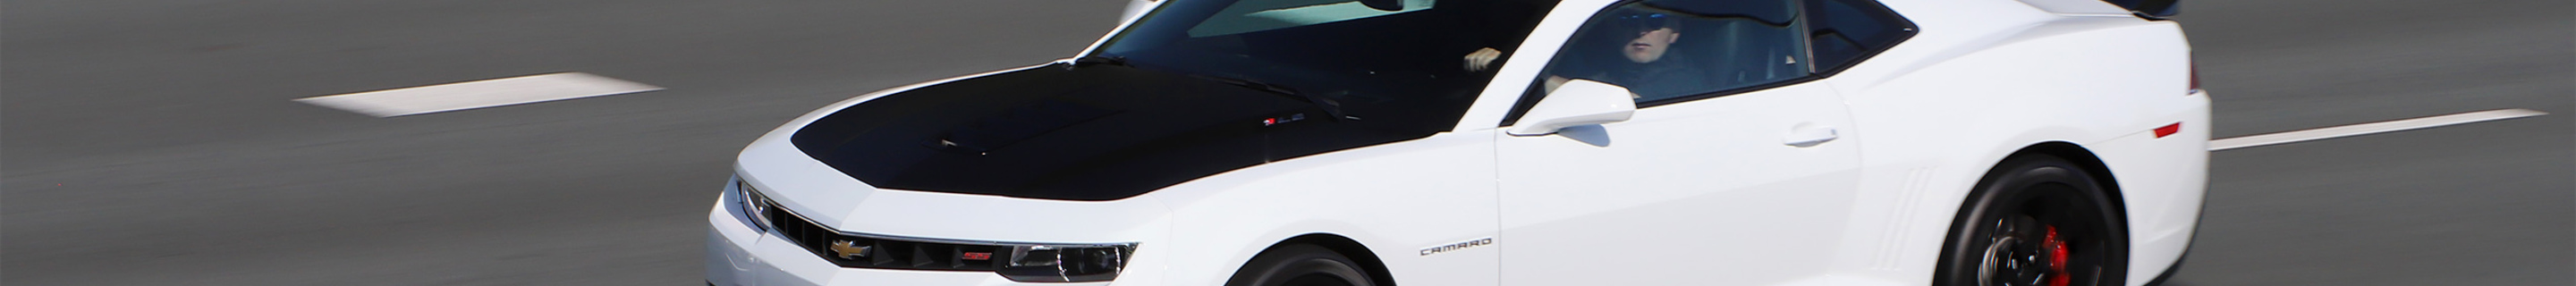 Chevrolet Camaro SS 1LE 2014